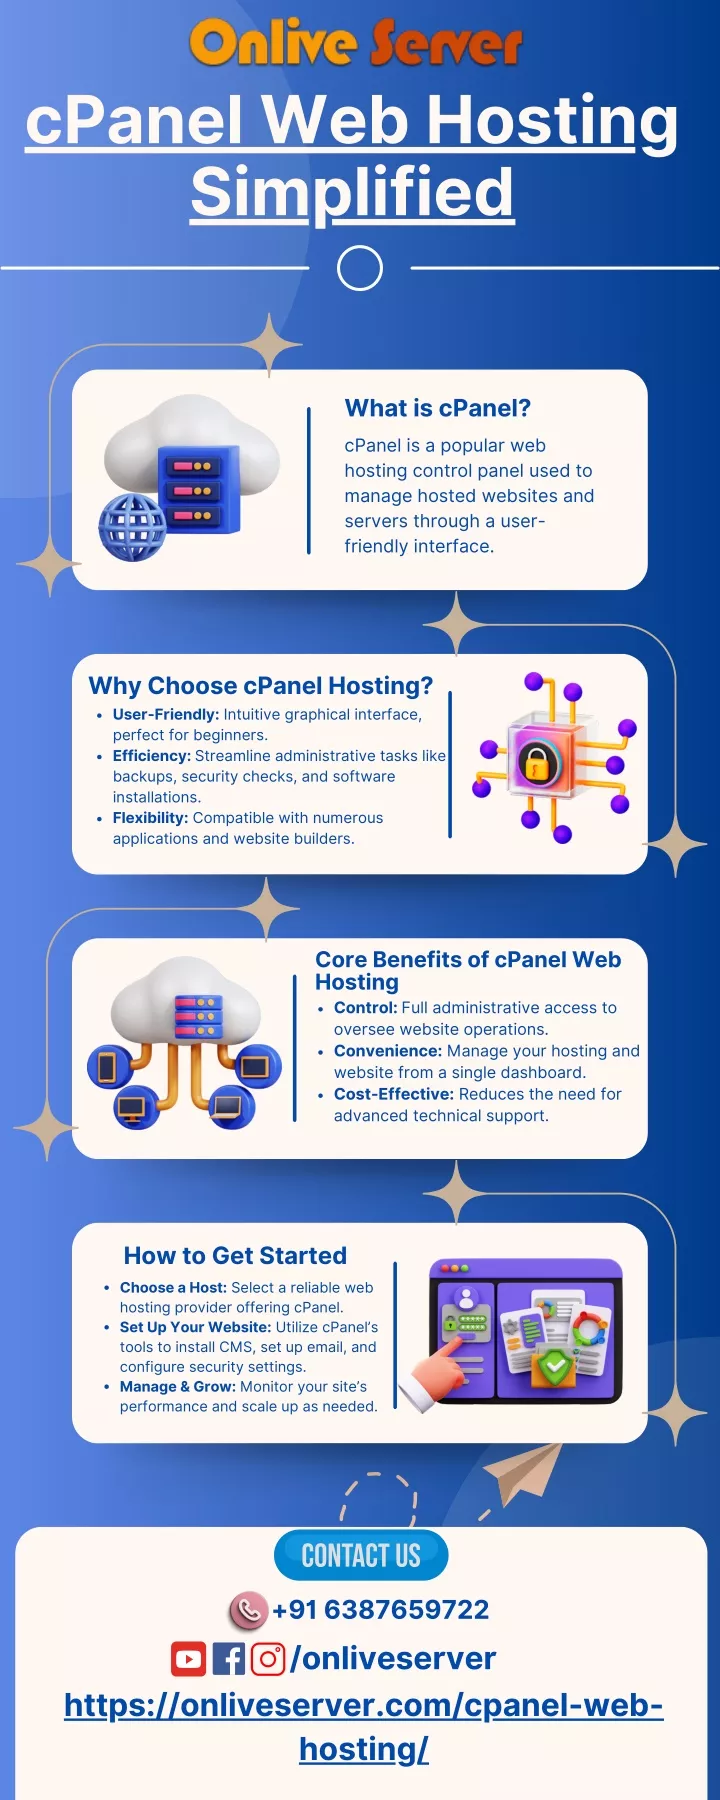 cpanel web hosting simplified